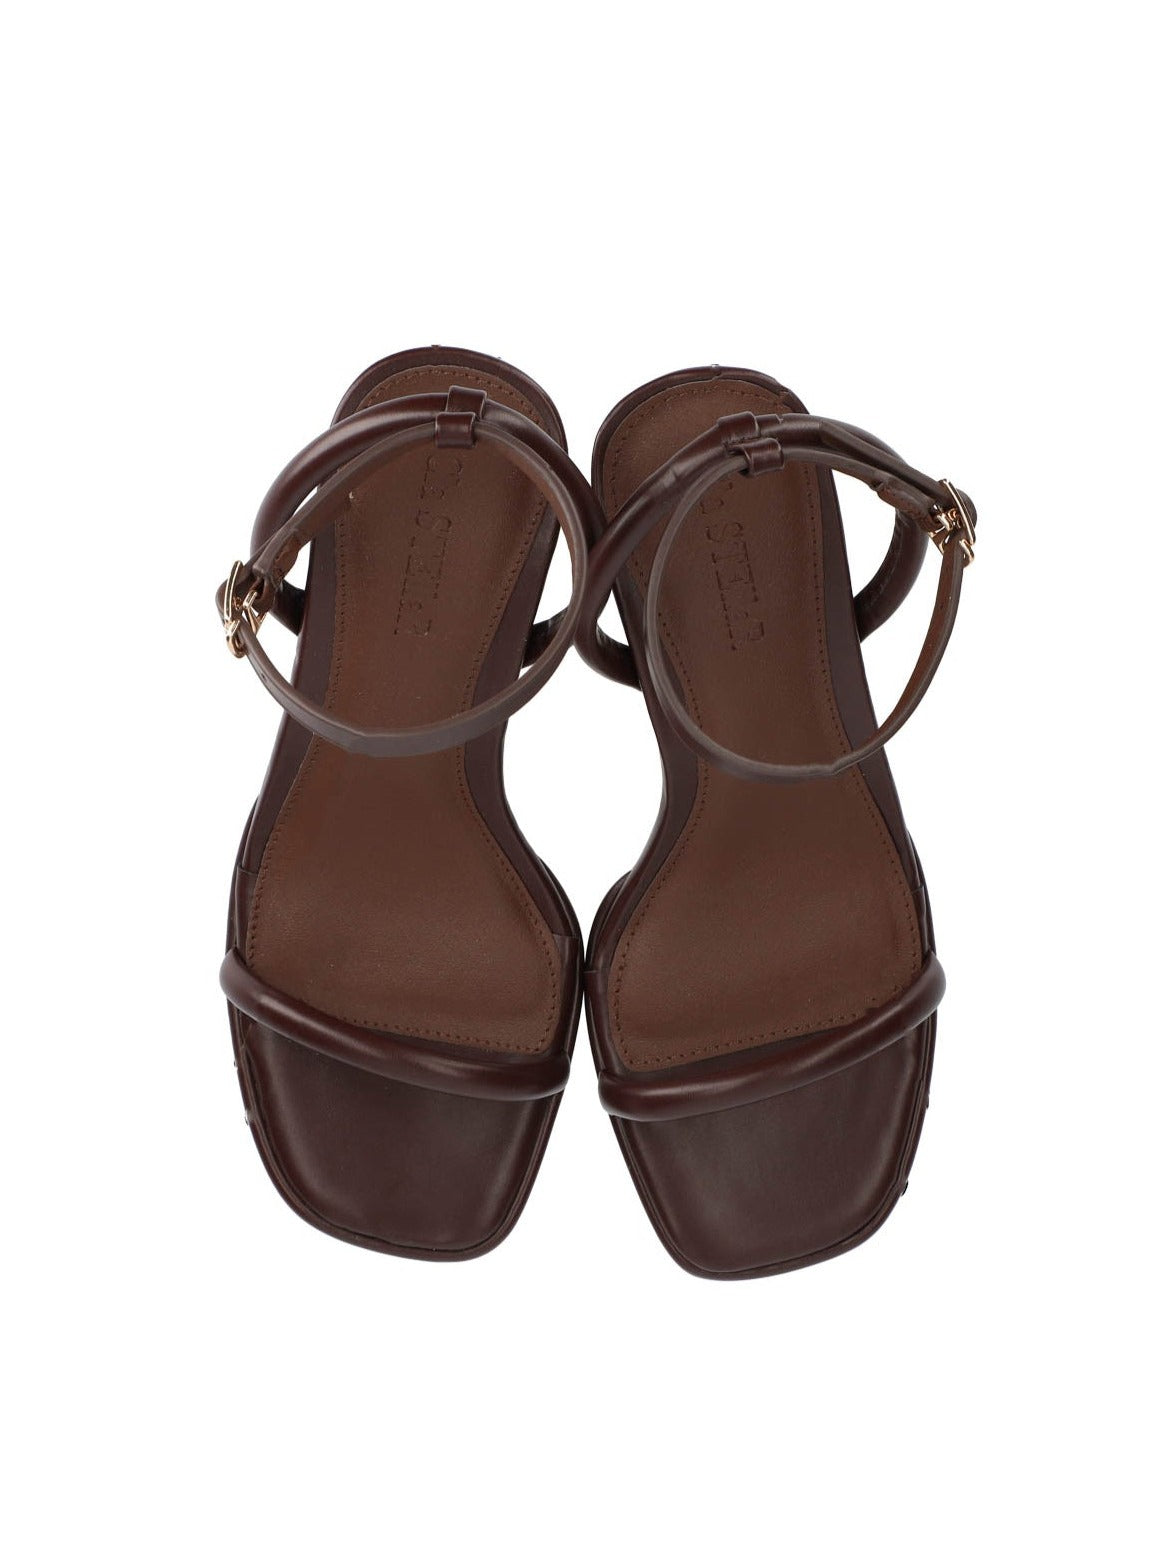 Cla strap sandal – ClaSTEllaR